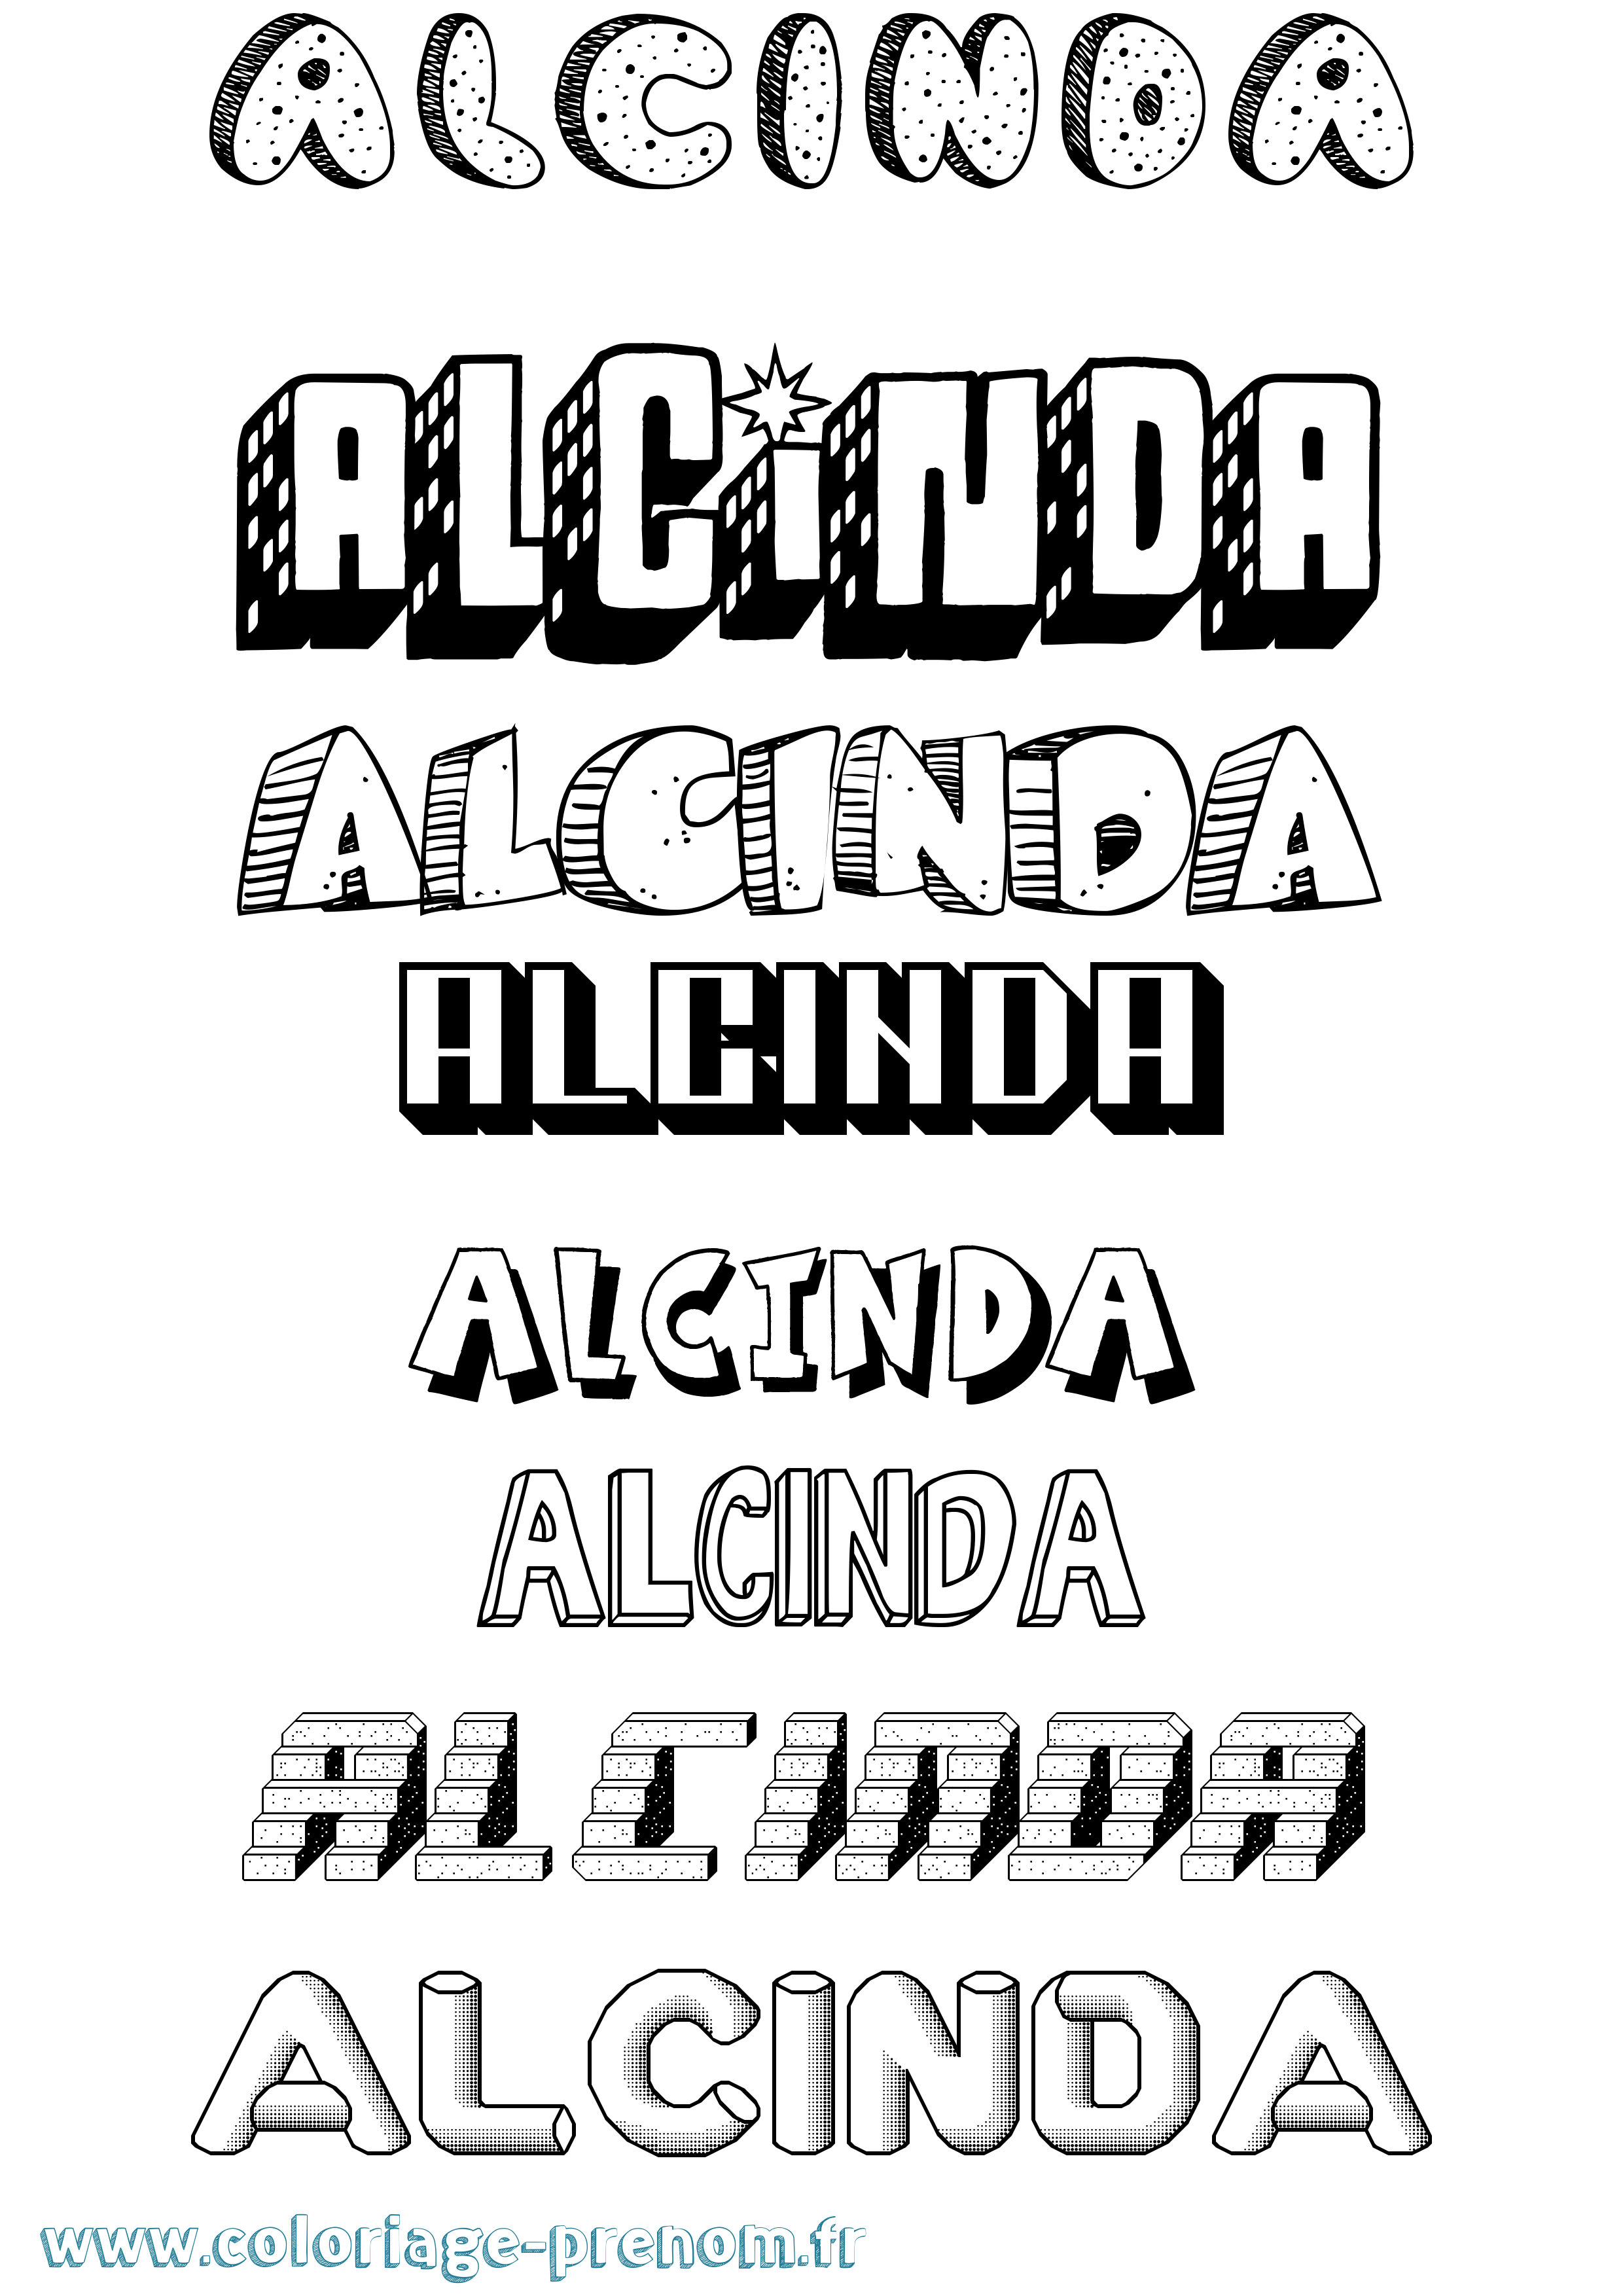 Coloriage prénom Alcinda Effet 3D